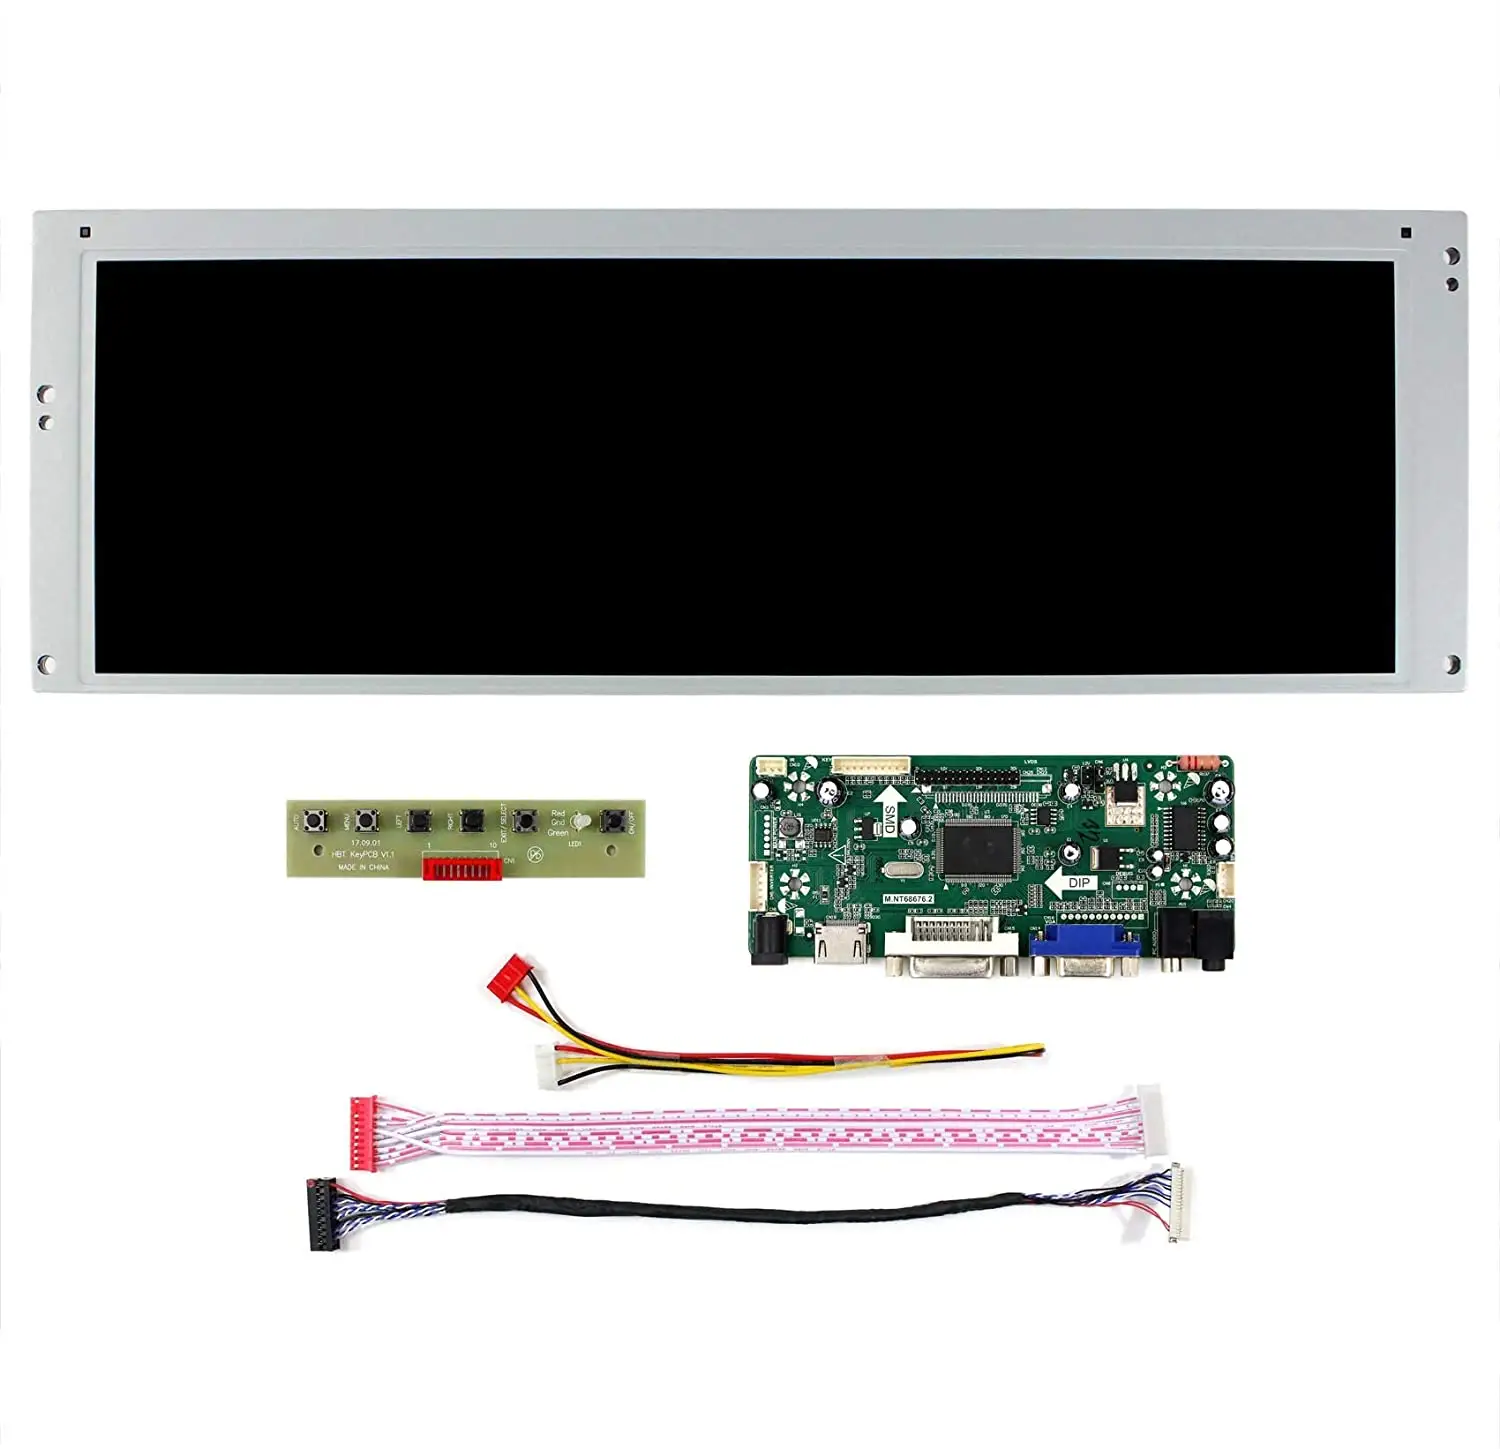 Monitor Portabel Ultra Tipis 1080P 15 6 Inci, Monitor Portabel dengan Layar Sentuh Kapasitif untuk PS4 Xbox Switch Laptop PC Mini